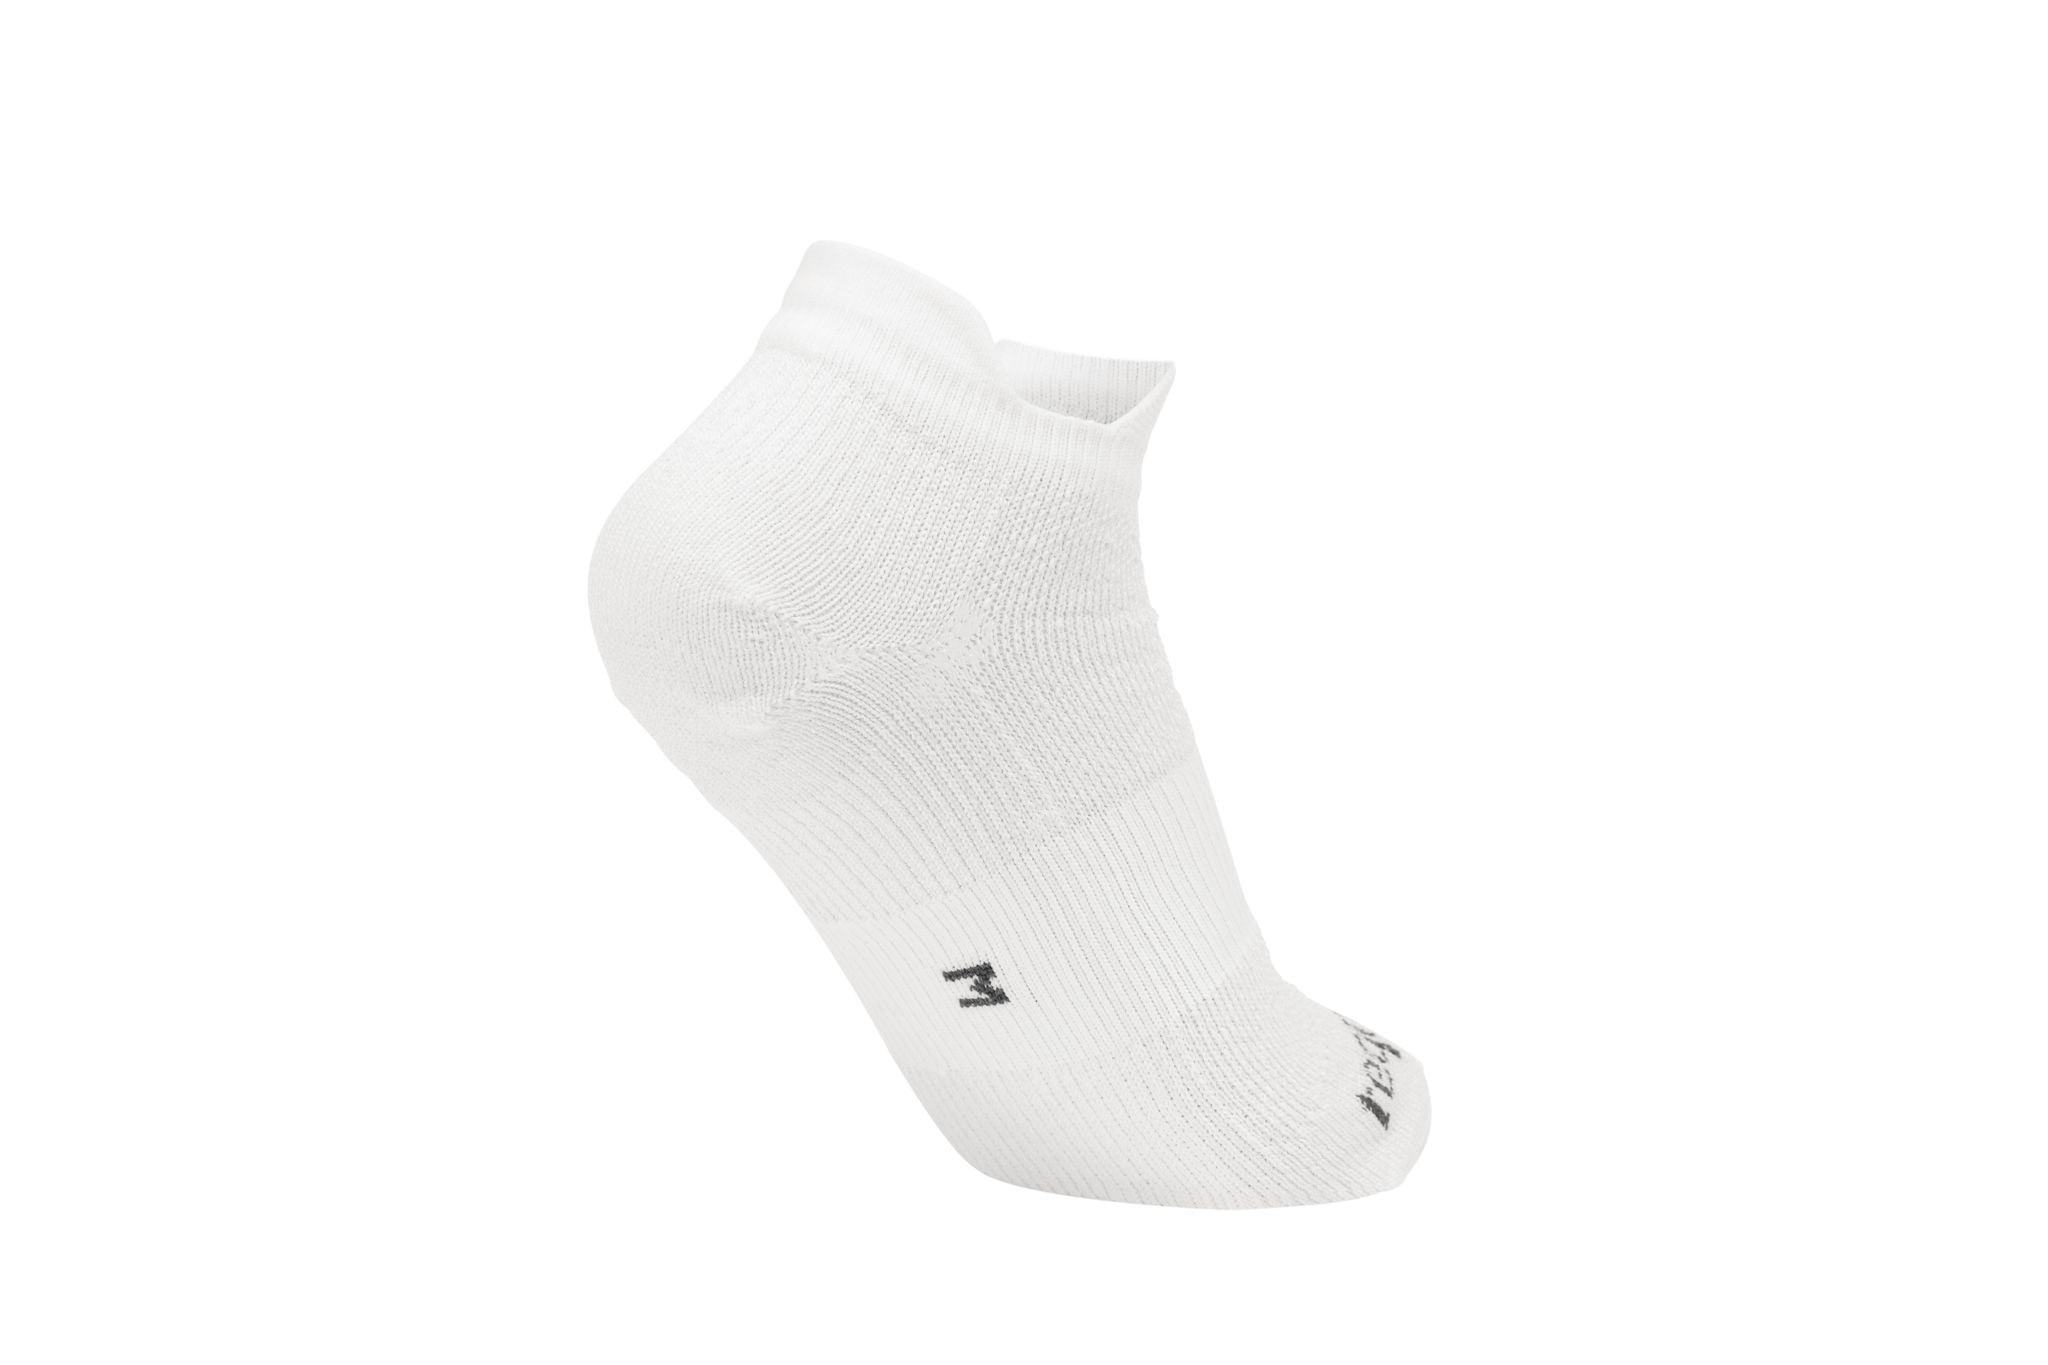 Teqnigrip Low-Cut Sock / White